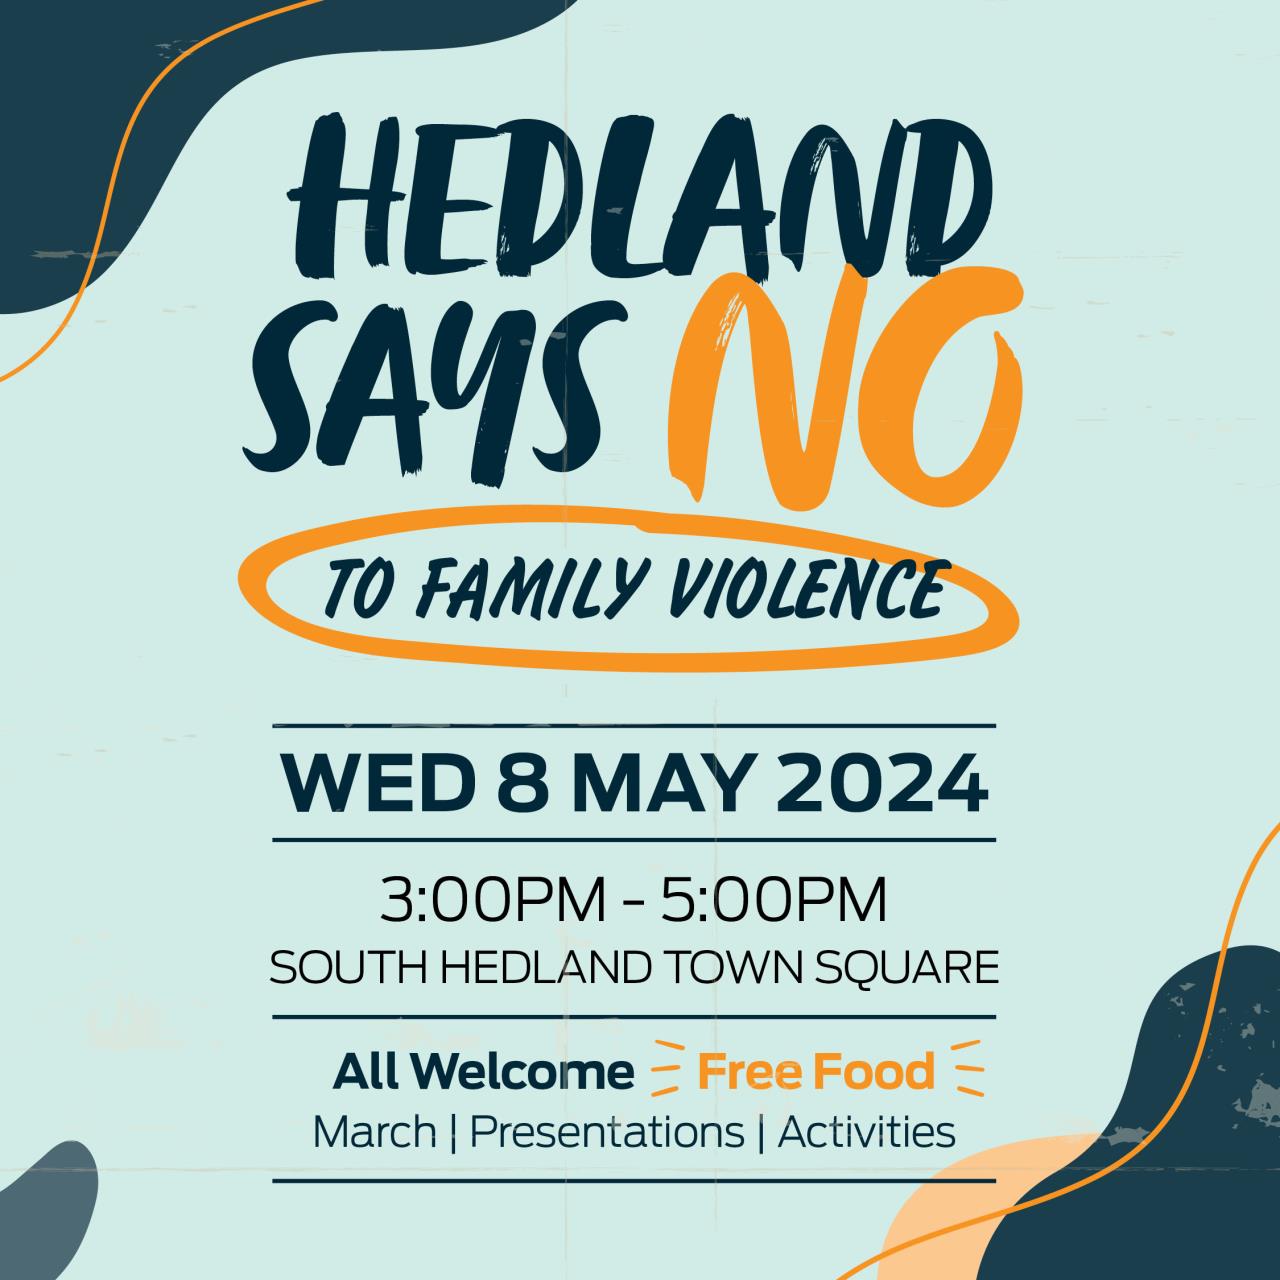 Hedland Says NO to Family Violence